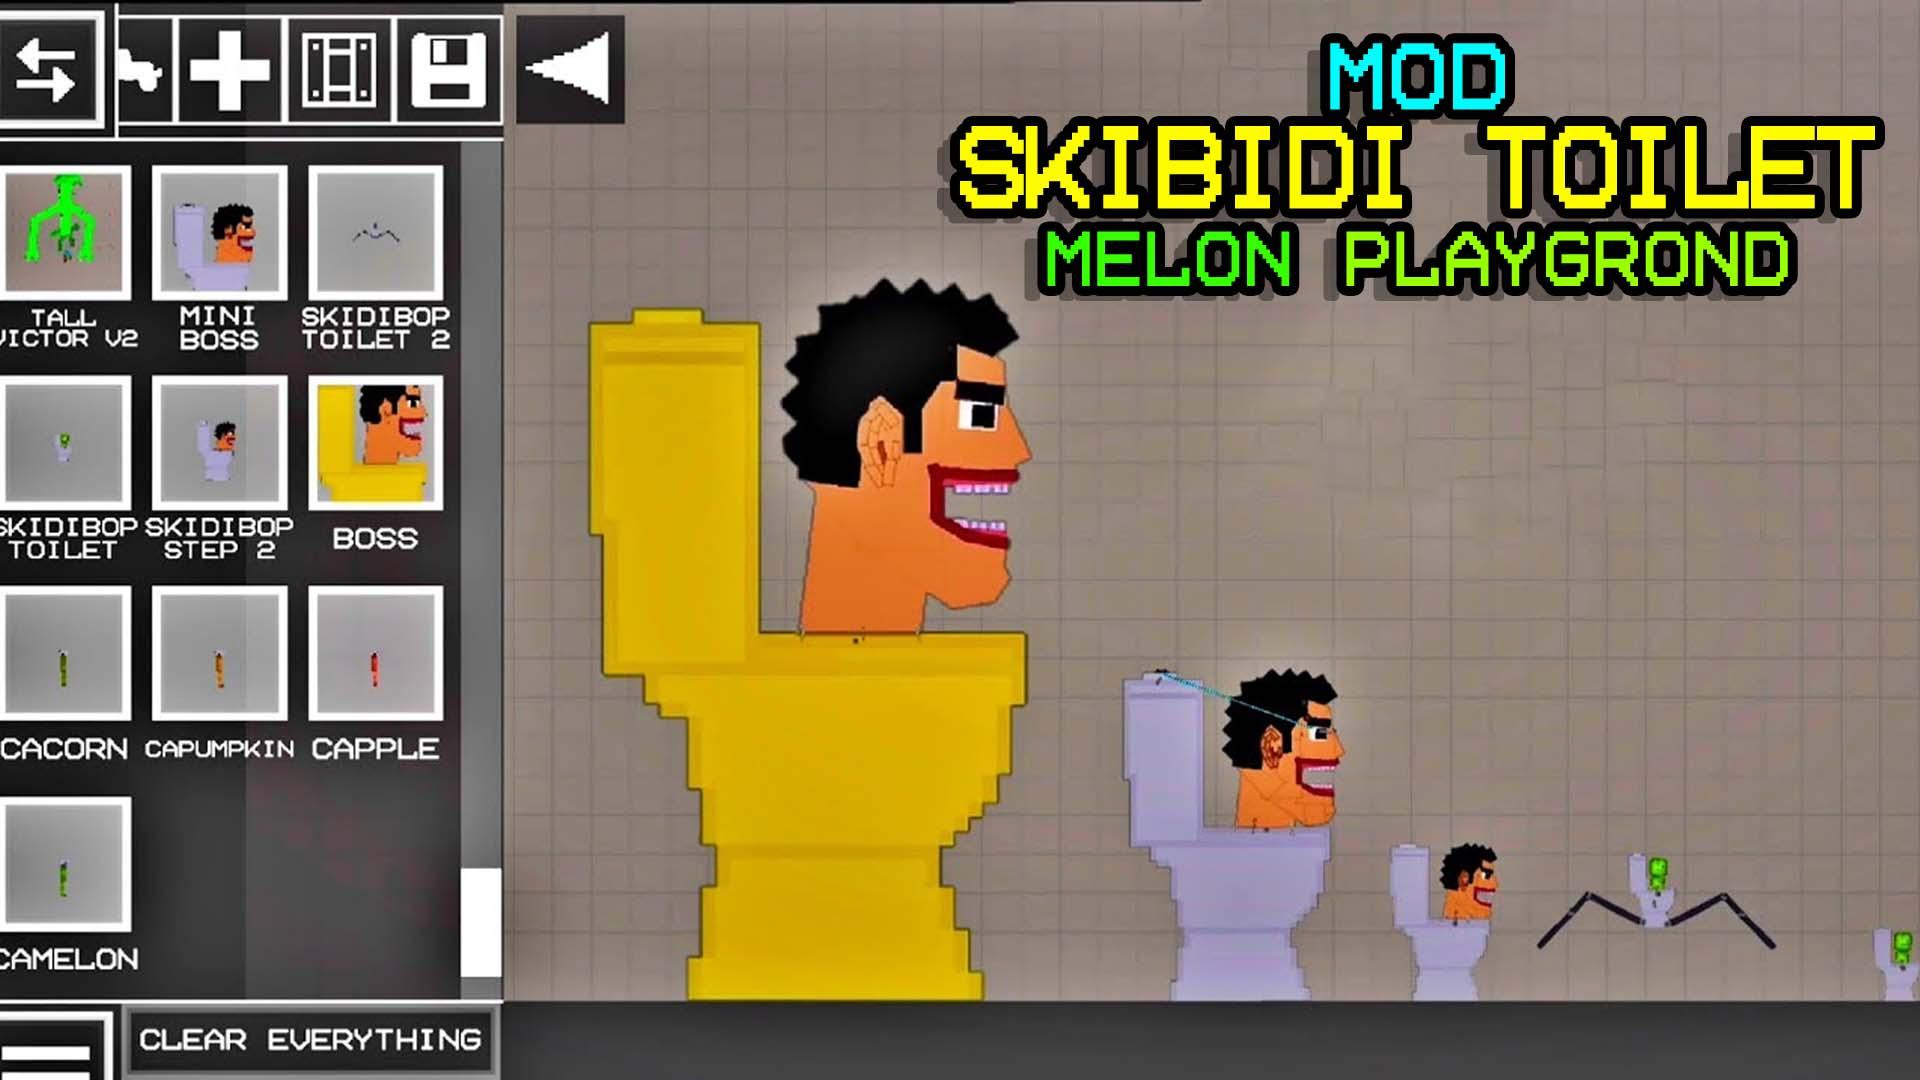 Мод скибиди туалет 8.6. Mod Melon Playground SKIBIDI Toilet. Мелон санбокс фото игры. Игрушка Мелон мод. Скибиди туалет в Мелон плейграунд.